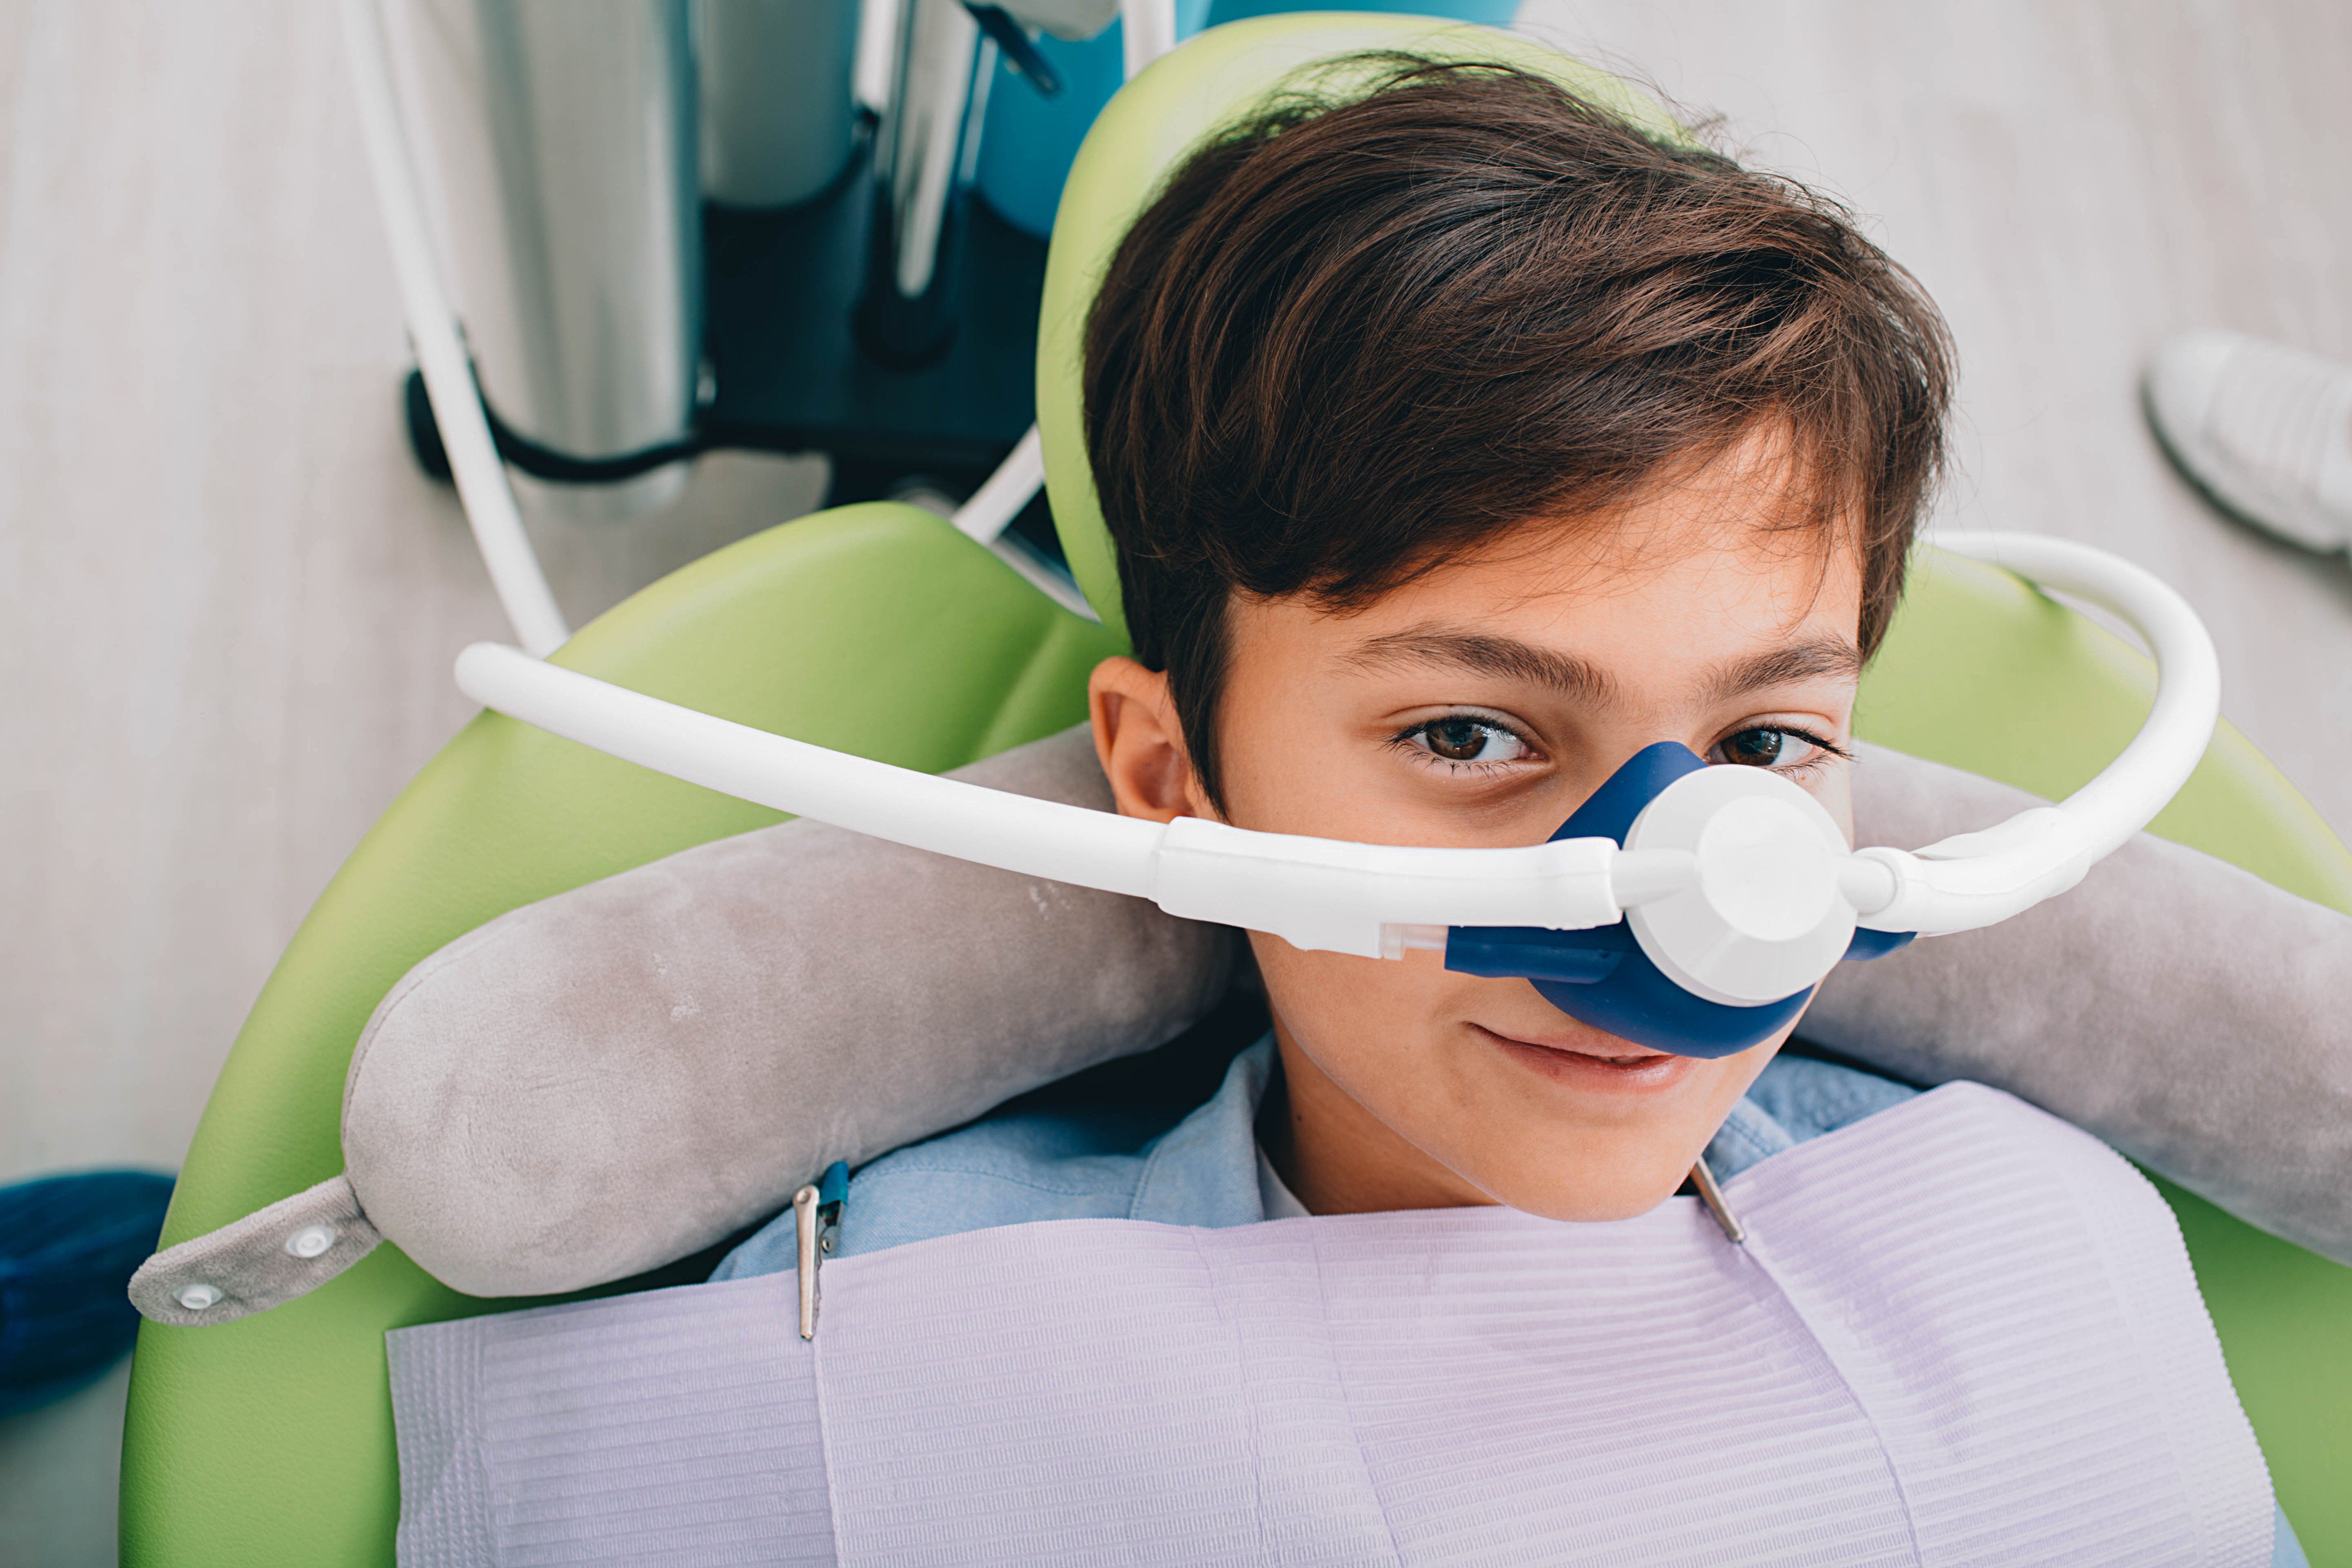 Does My Child Need Dental Treatment Under Sedation?